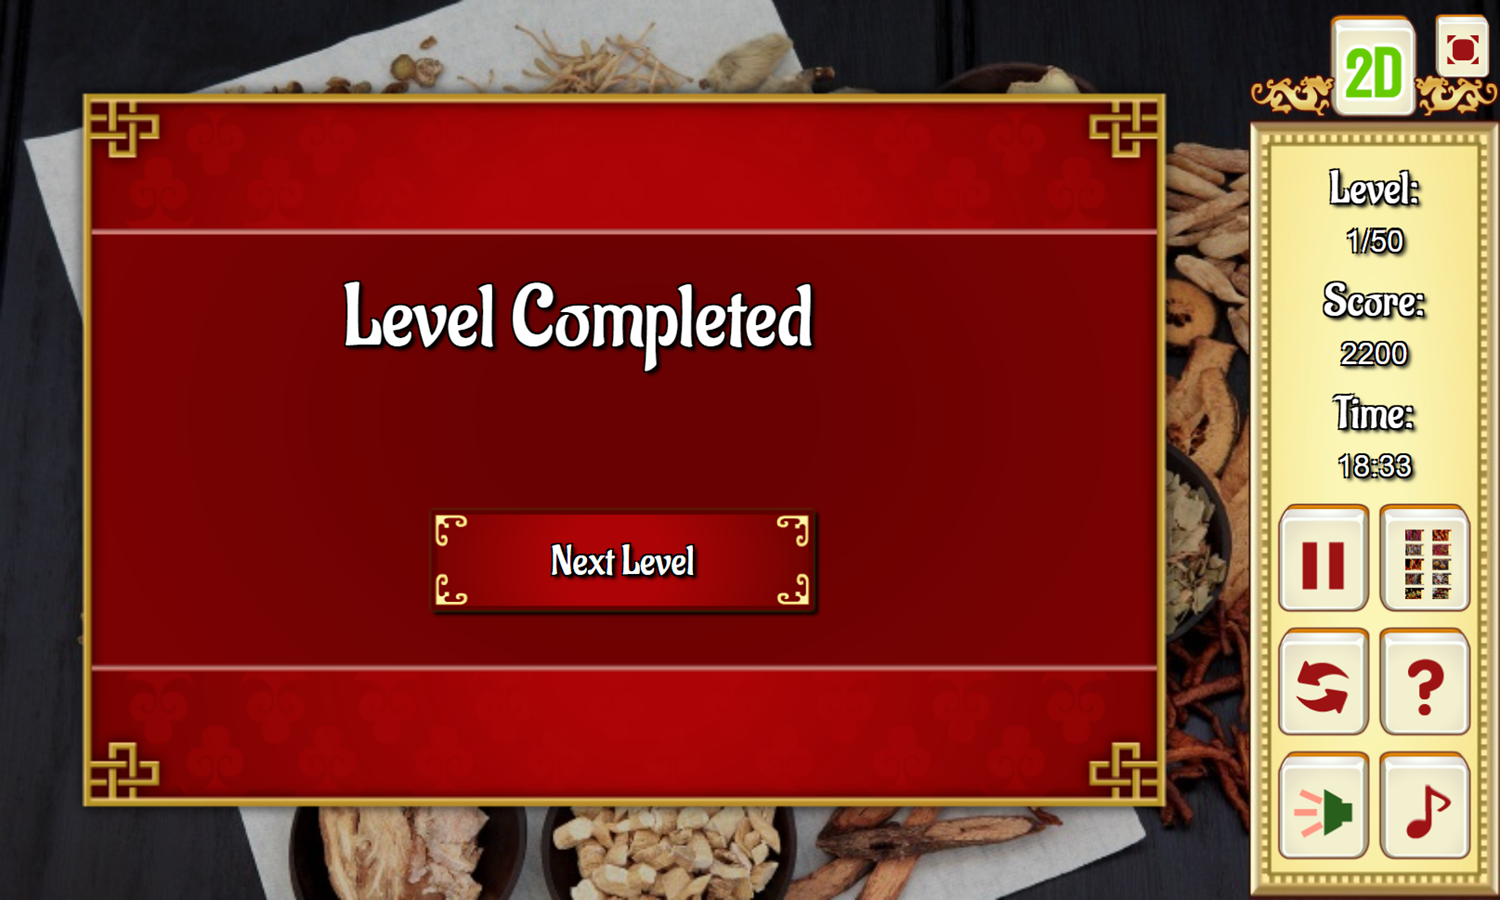 Mahjongg Shanghai Game Level Completed Screenshot.